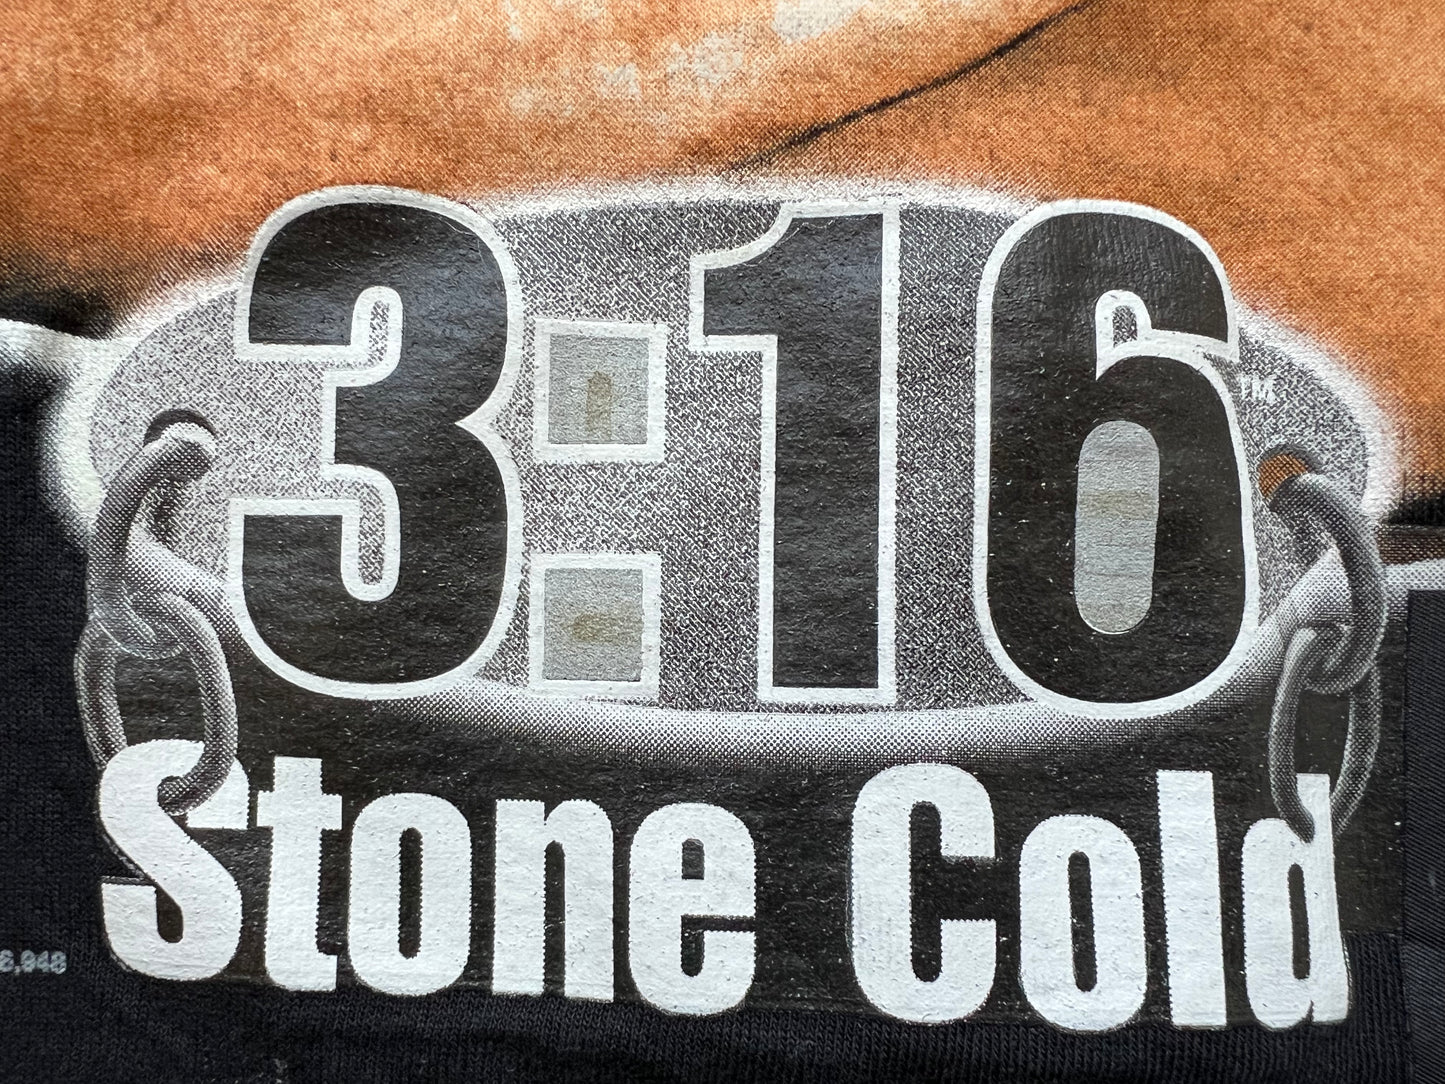 1998 WWF “Stone Cold” Steve Austin shirt